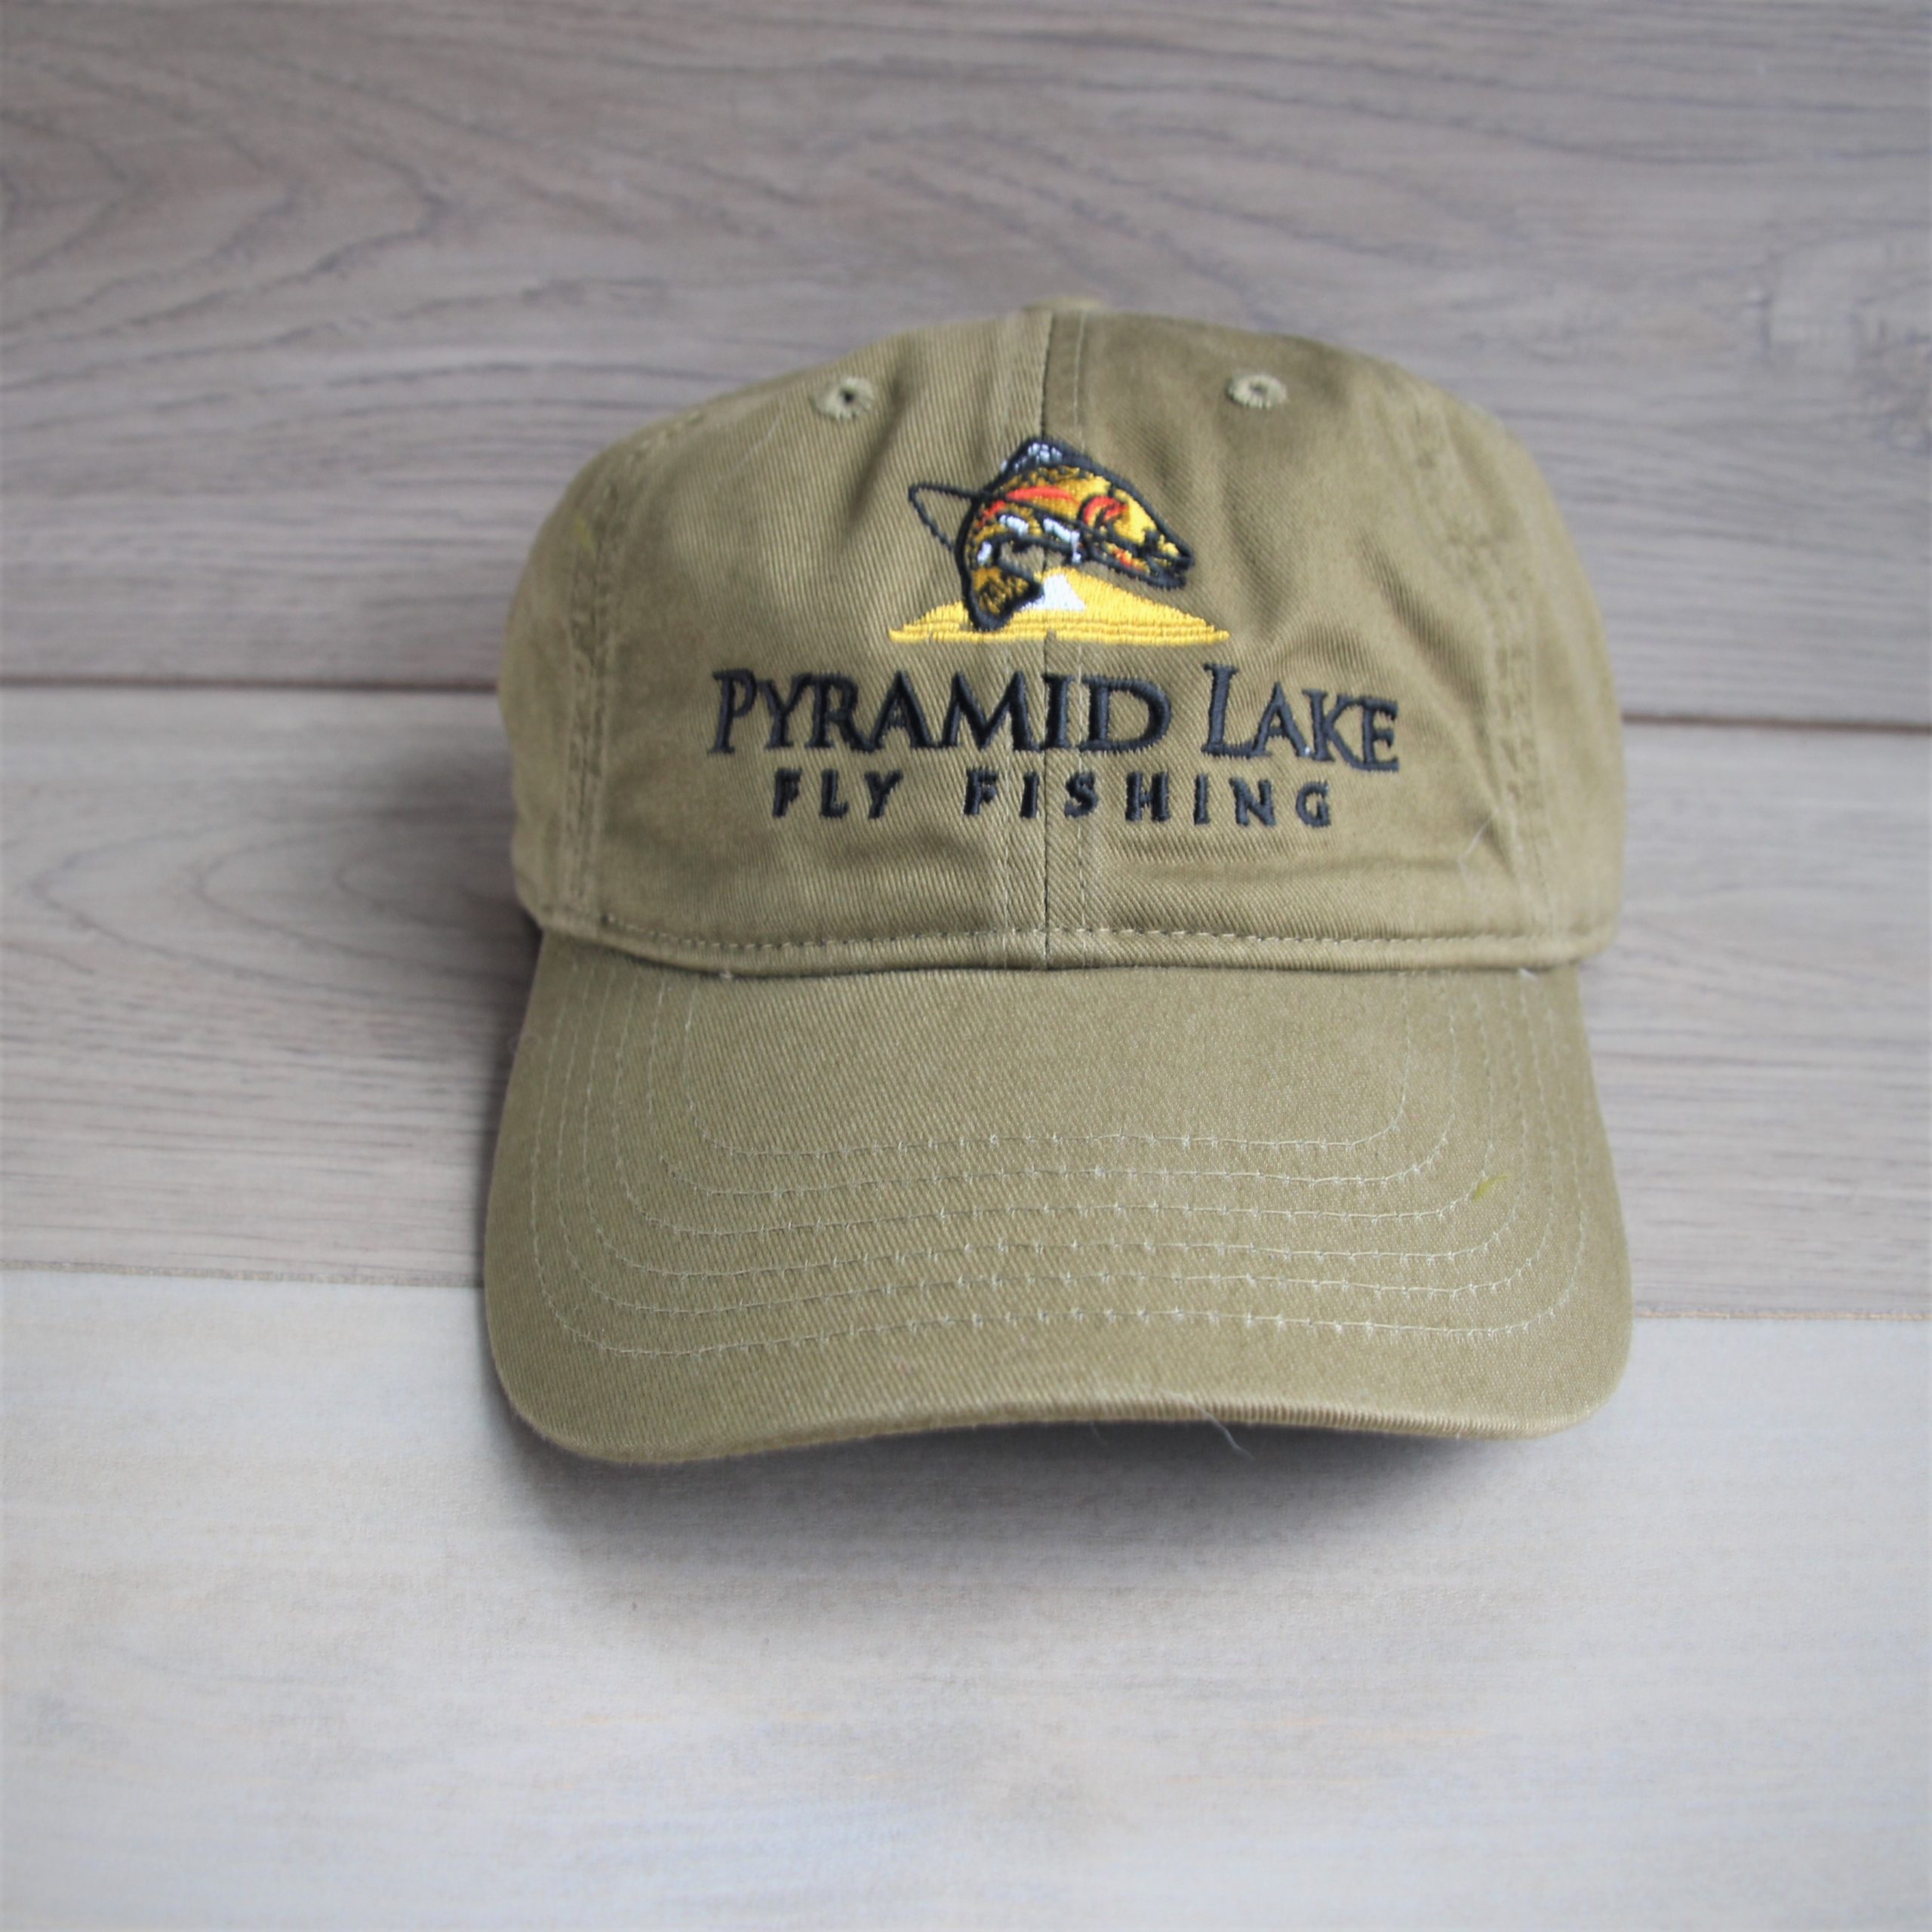 Bio Washed Chino Twill Olive – Lake Fishing Fly | Pyramid Hat Baseball